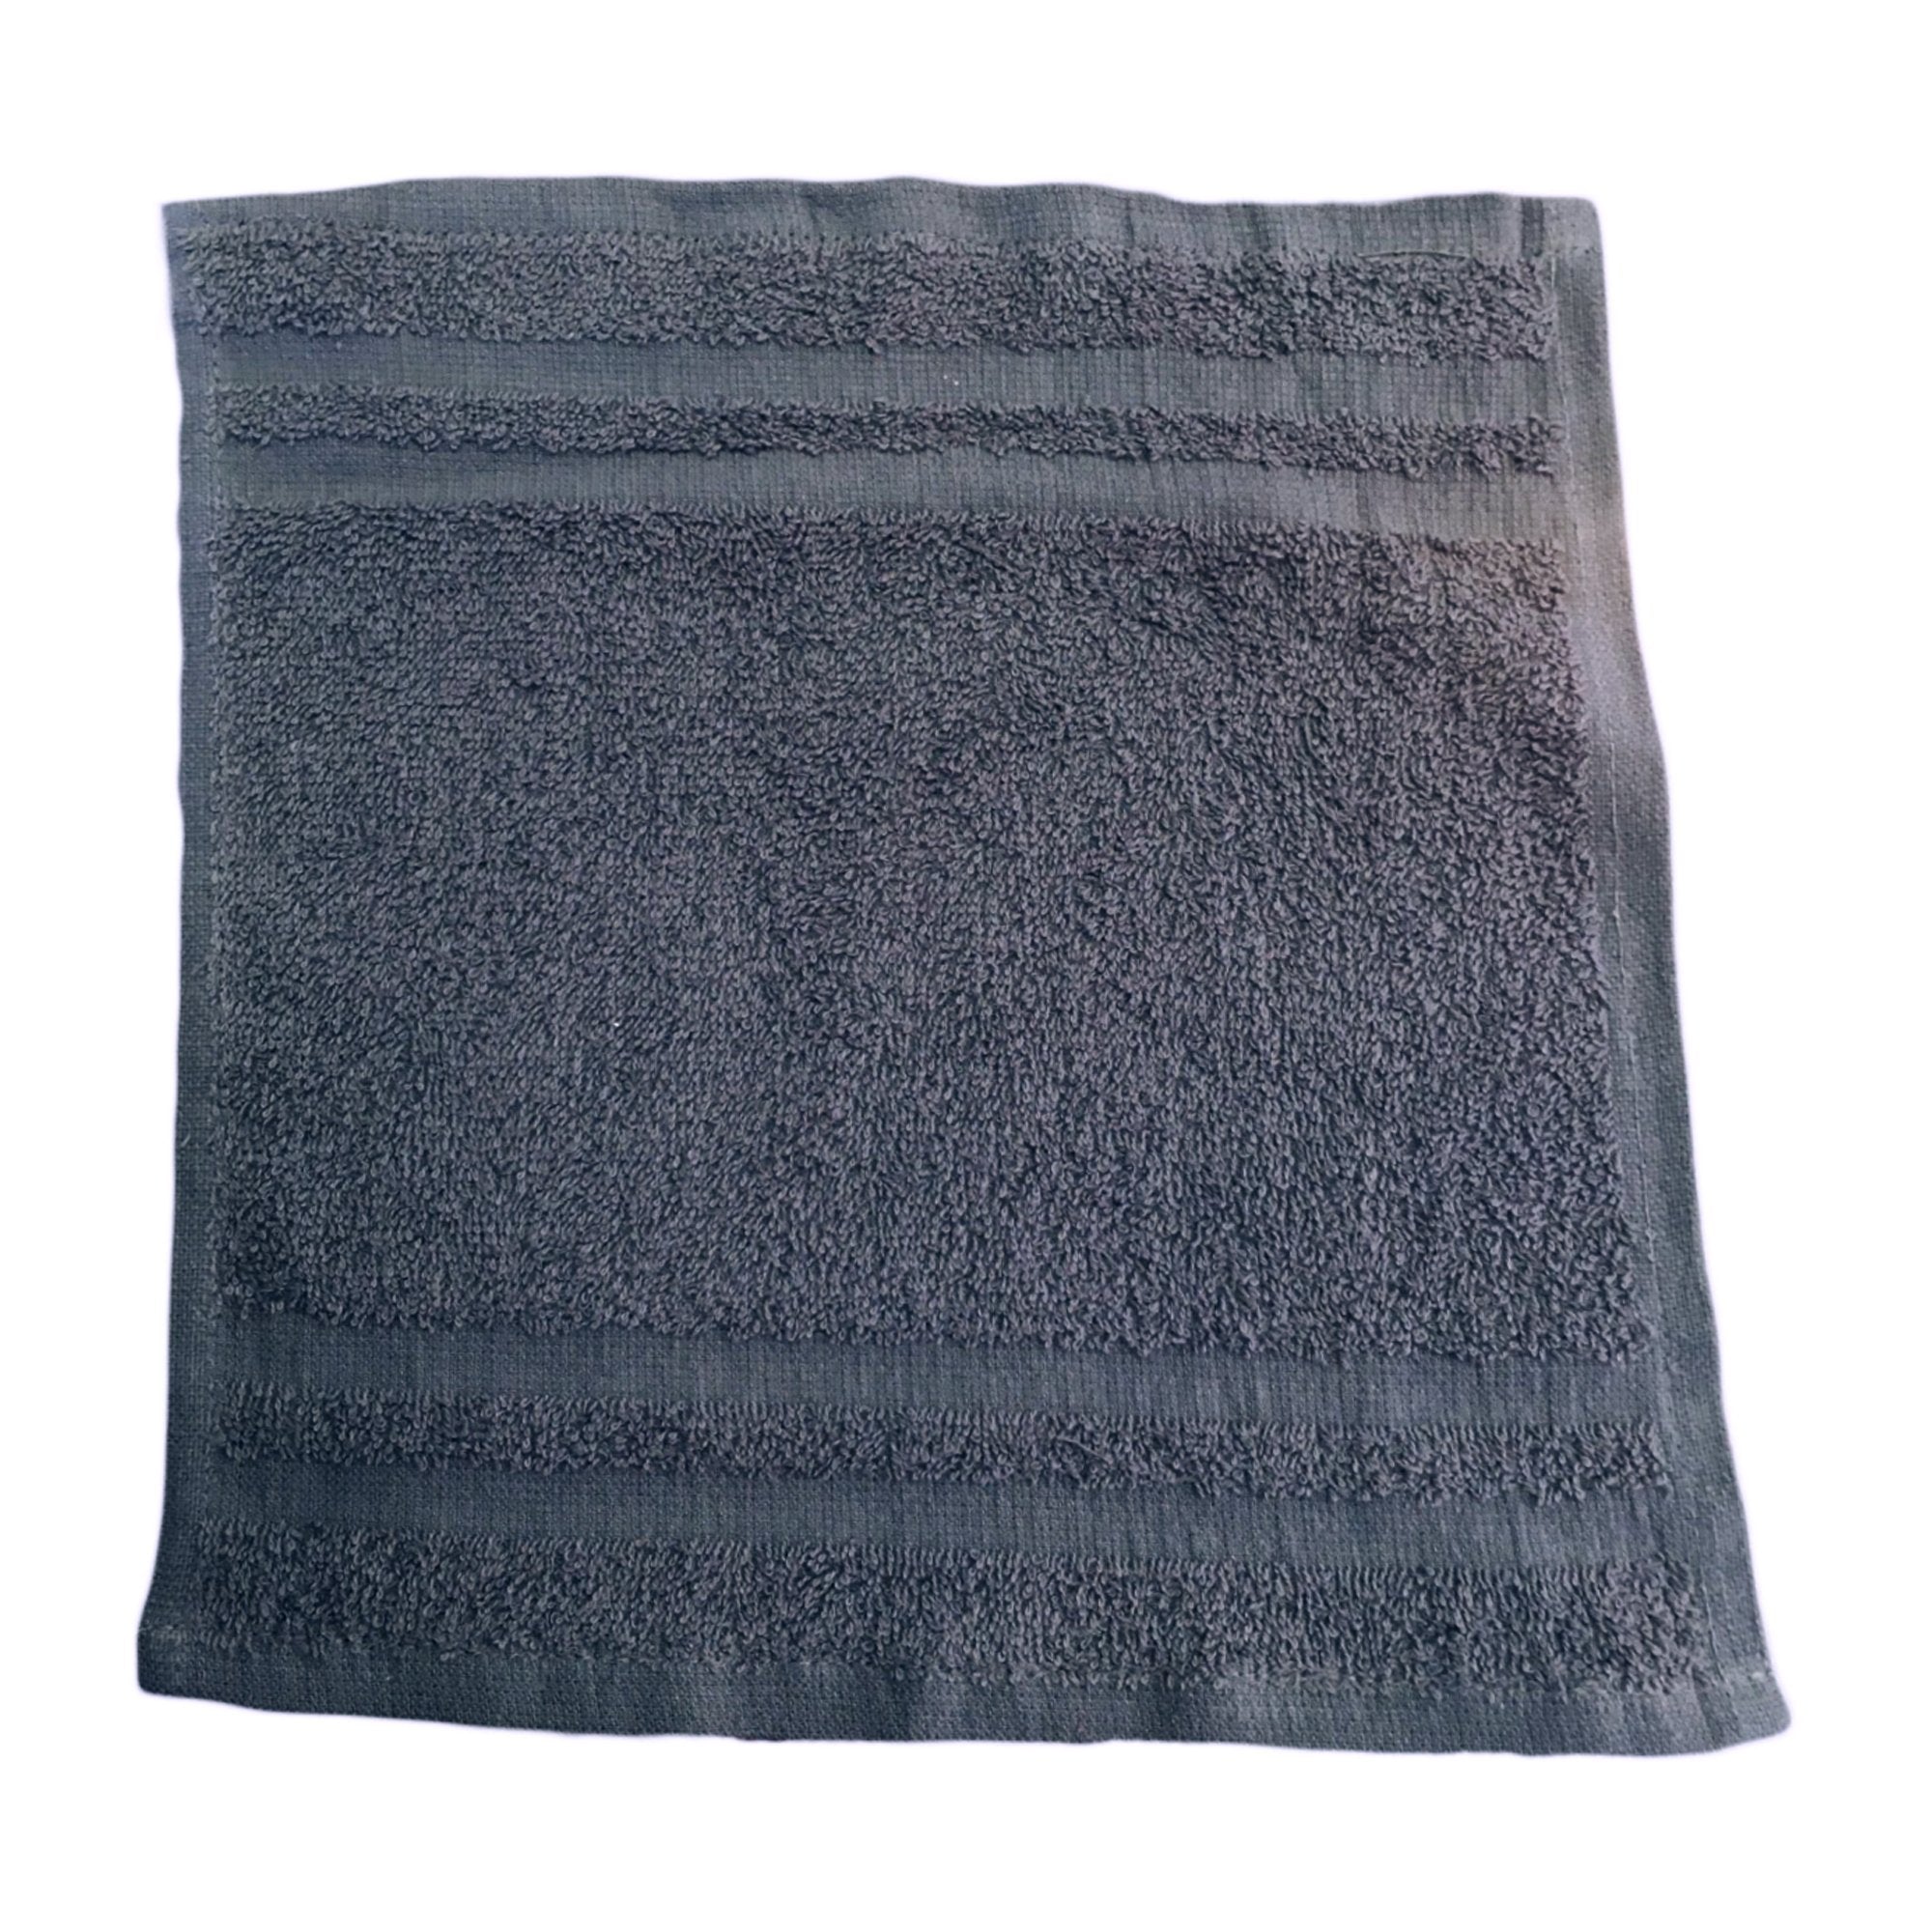 Washcloth Indulgence 12 X 12 Inch Slate Blue Reusable